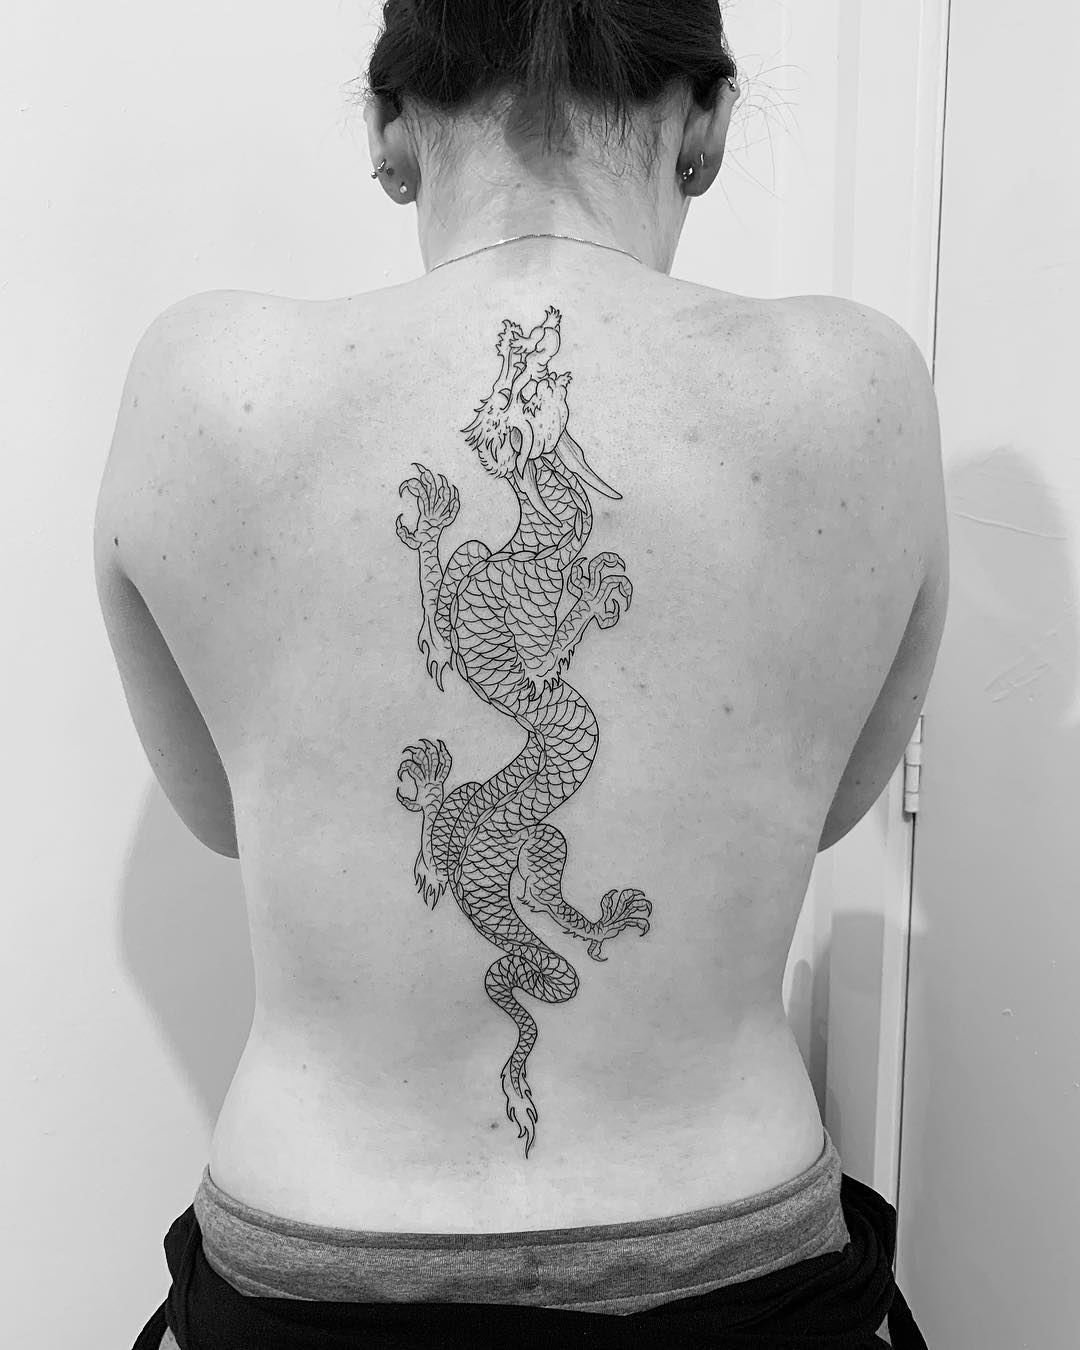 Tatuagens de dragões